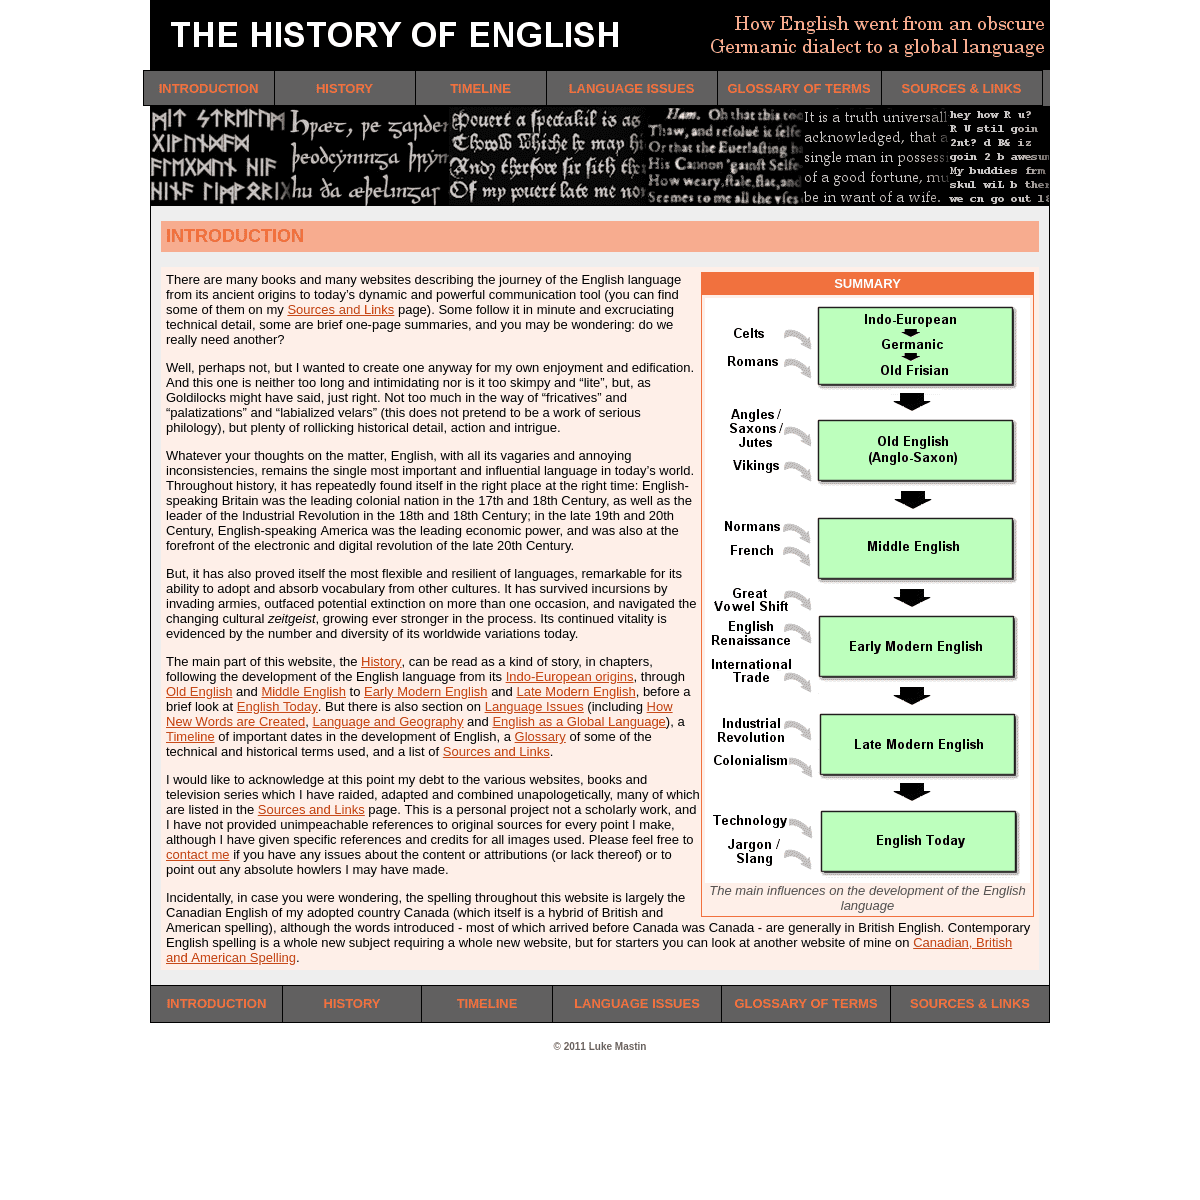 A complete backup of thehistoryofenglish.com